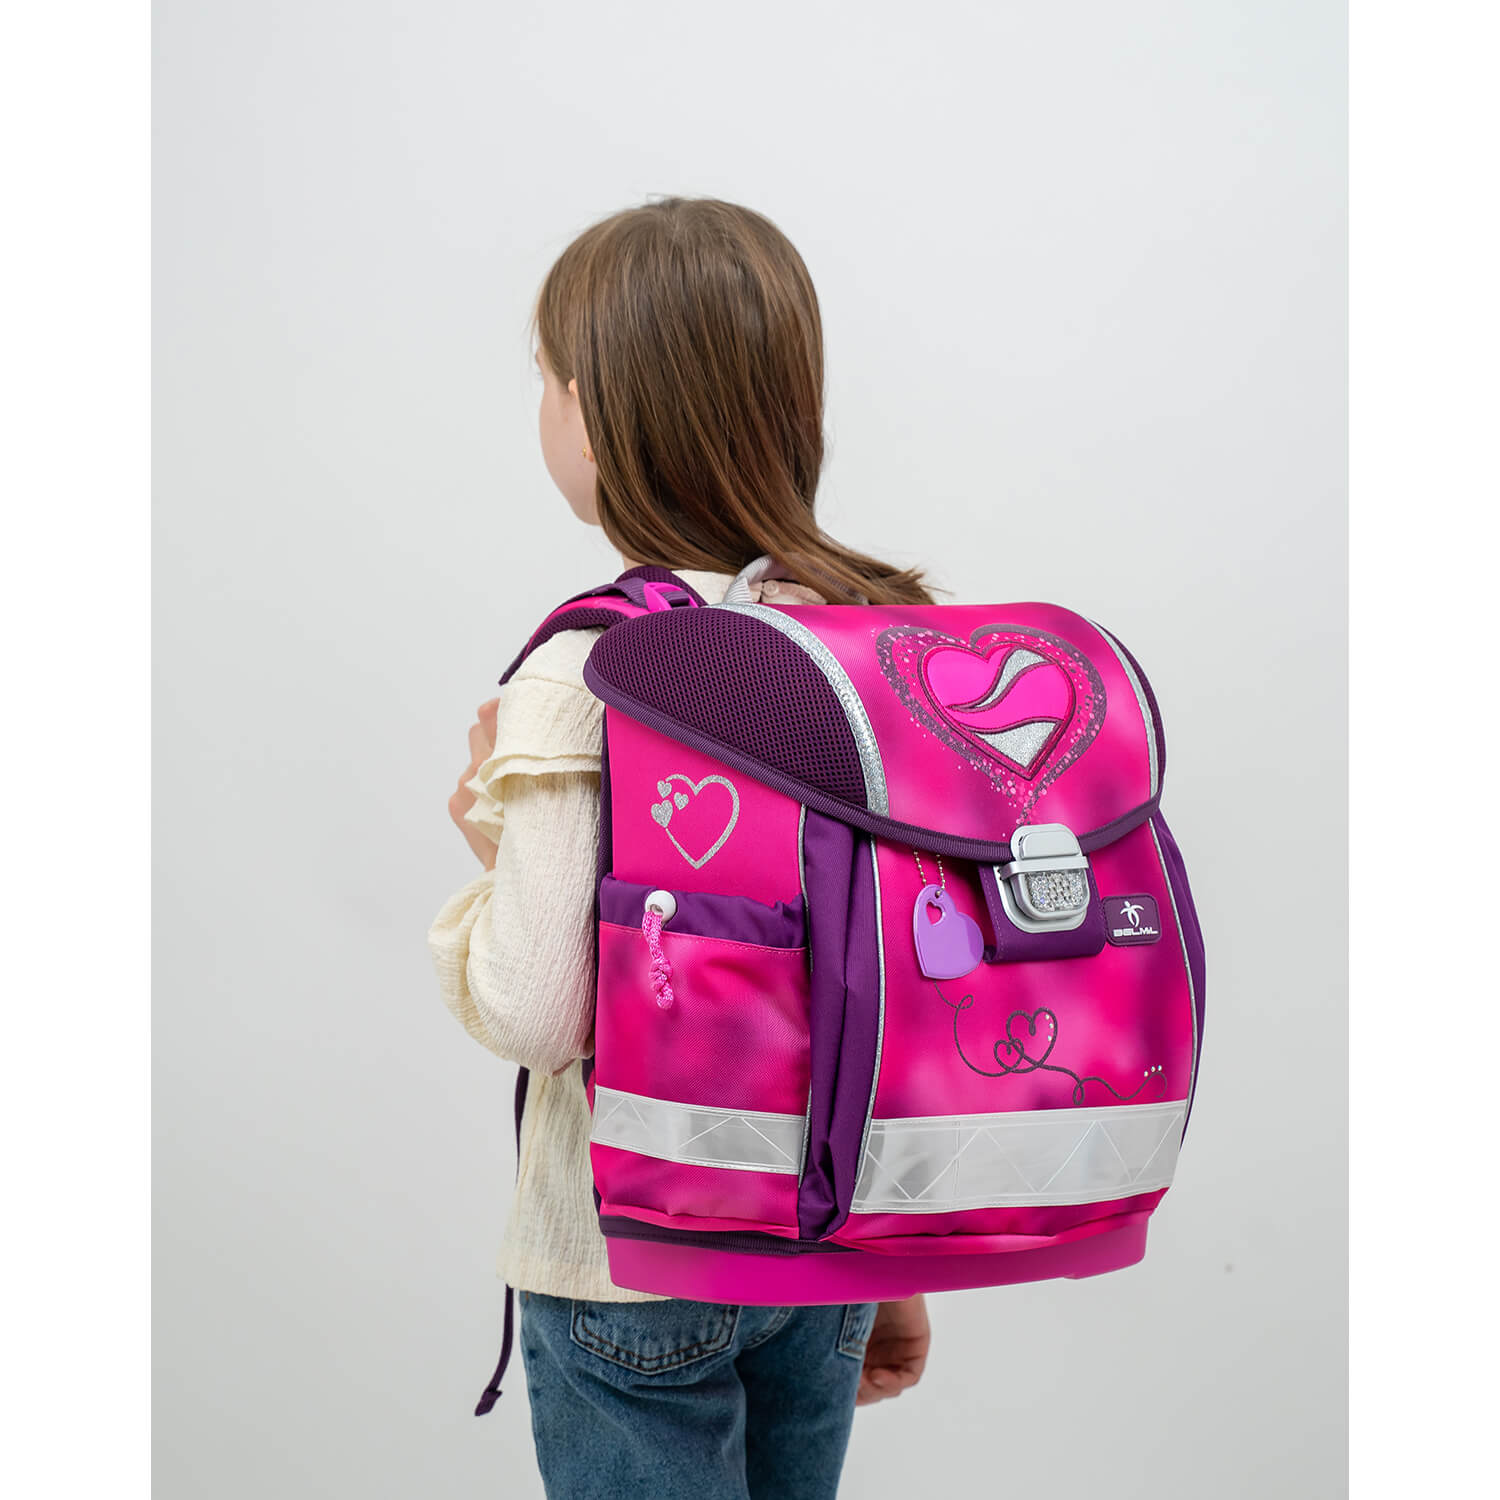 Classy Shiny Pink schoolbag set 5 pcs